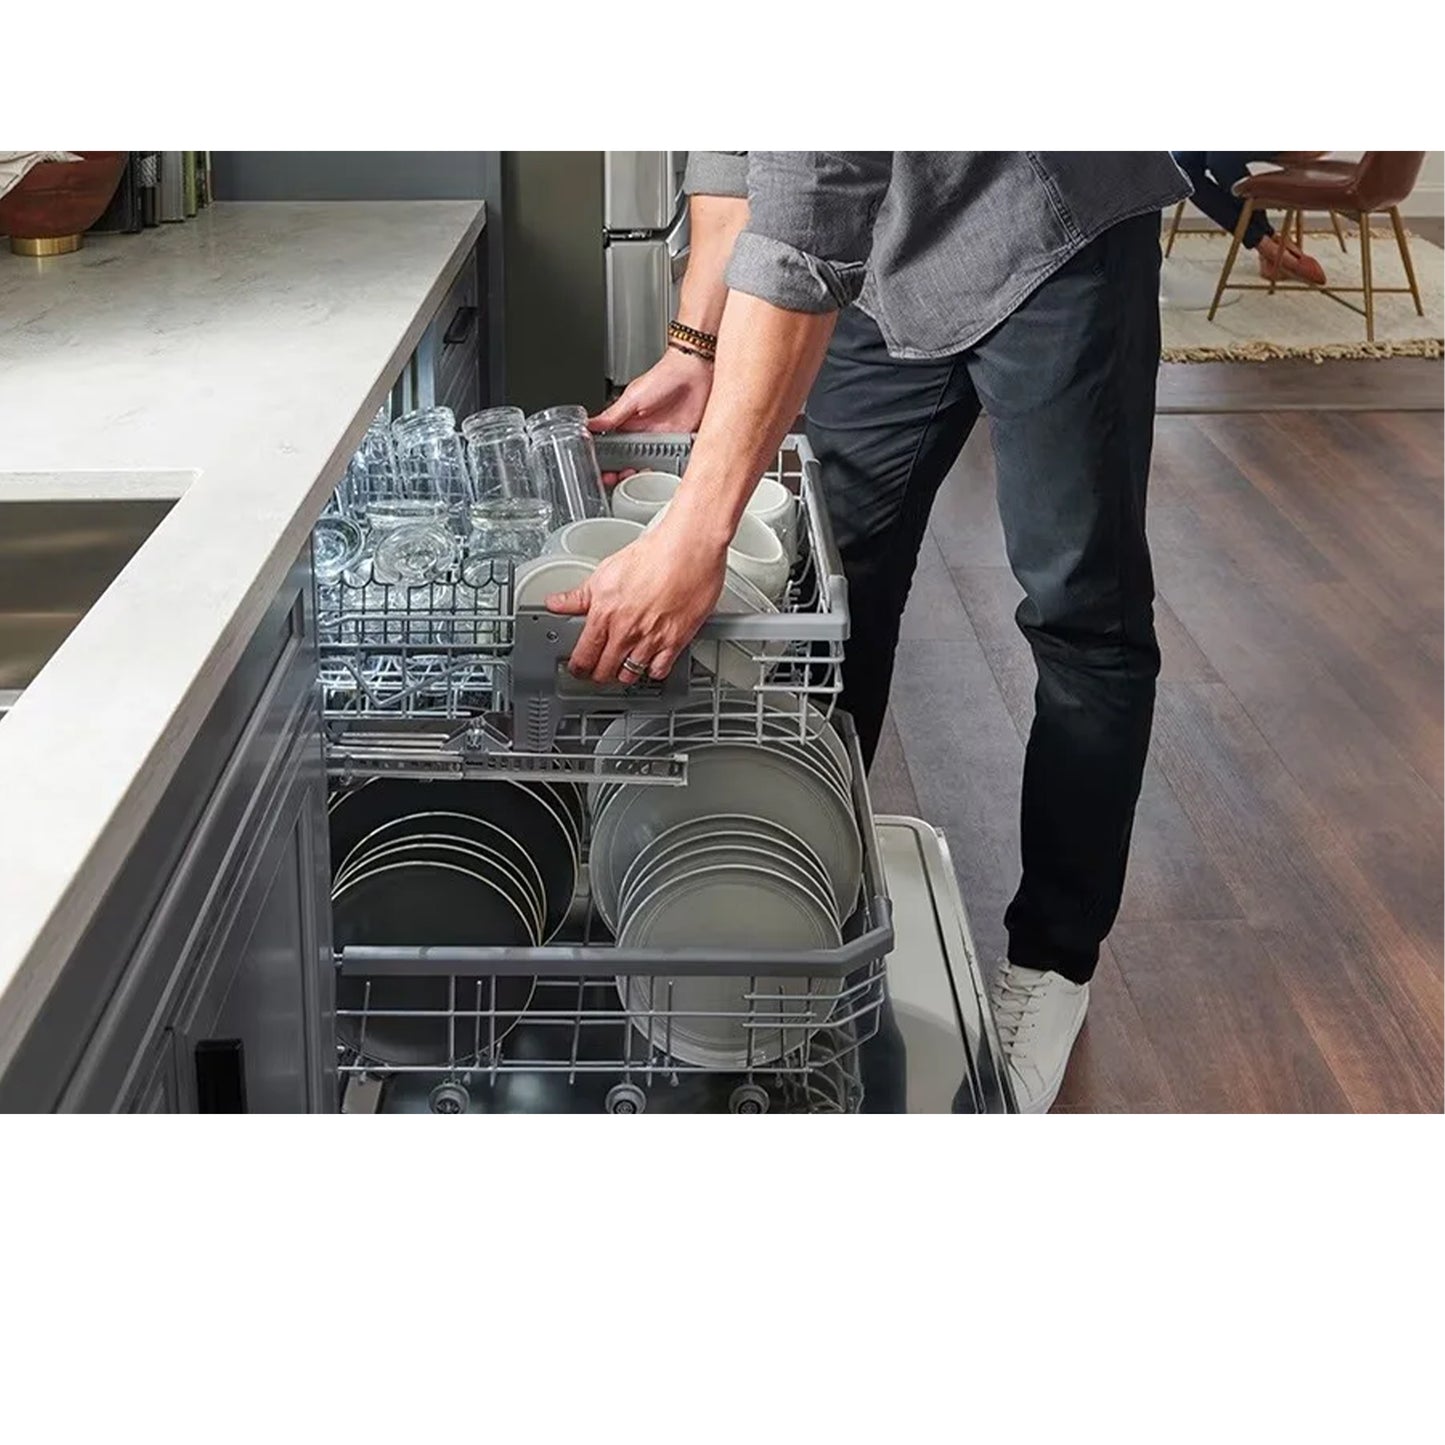 LG STUDIO Panel Ready Top Control Dishwasher with TrueSteam®